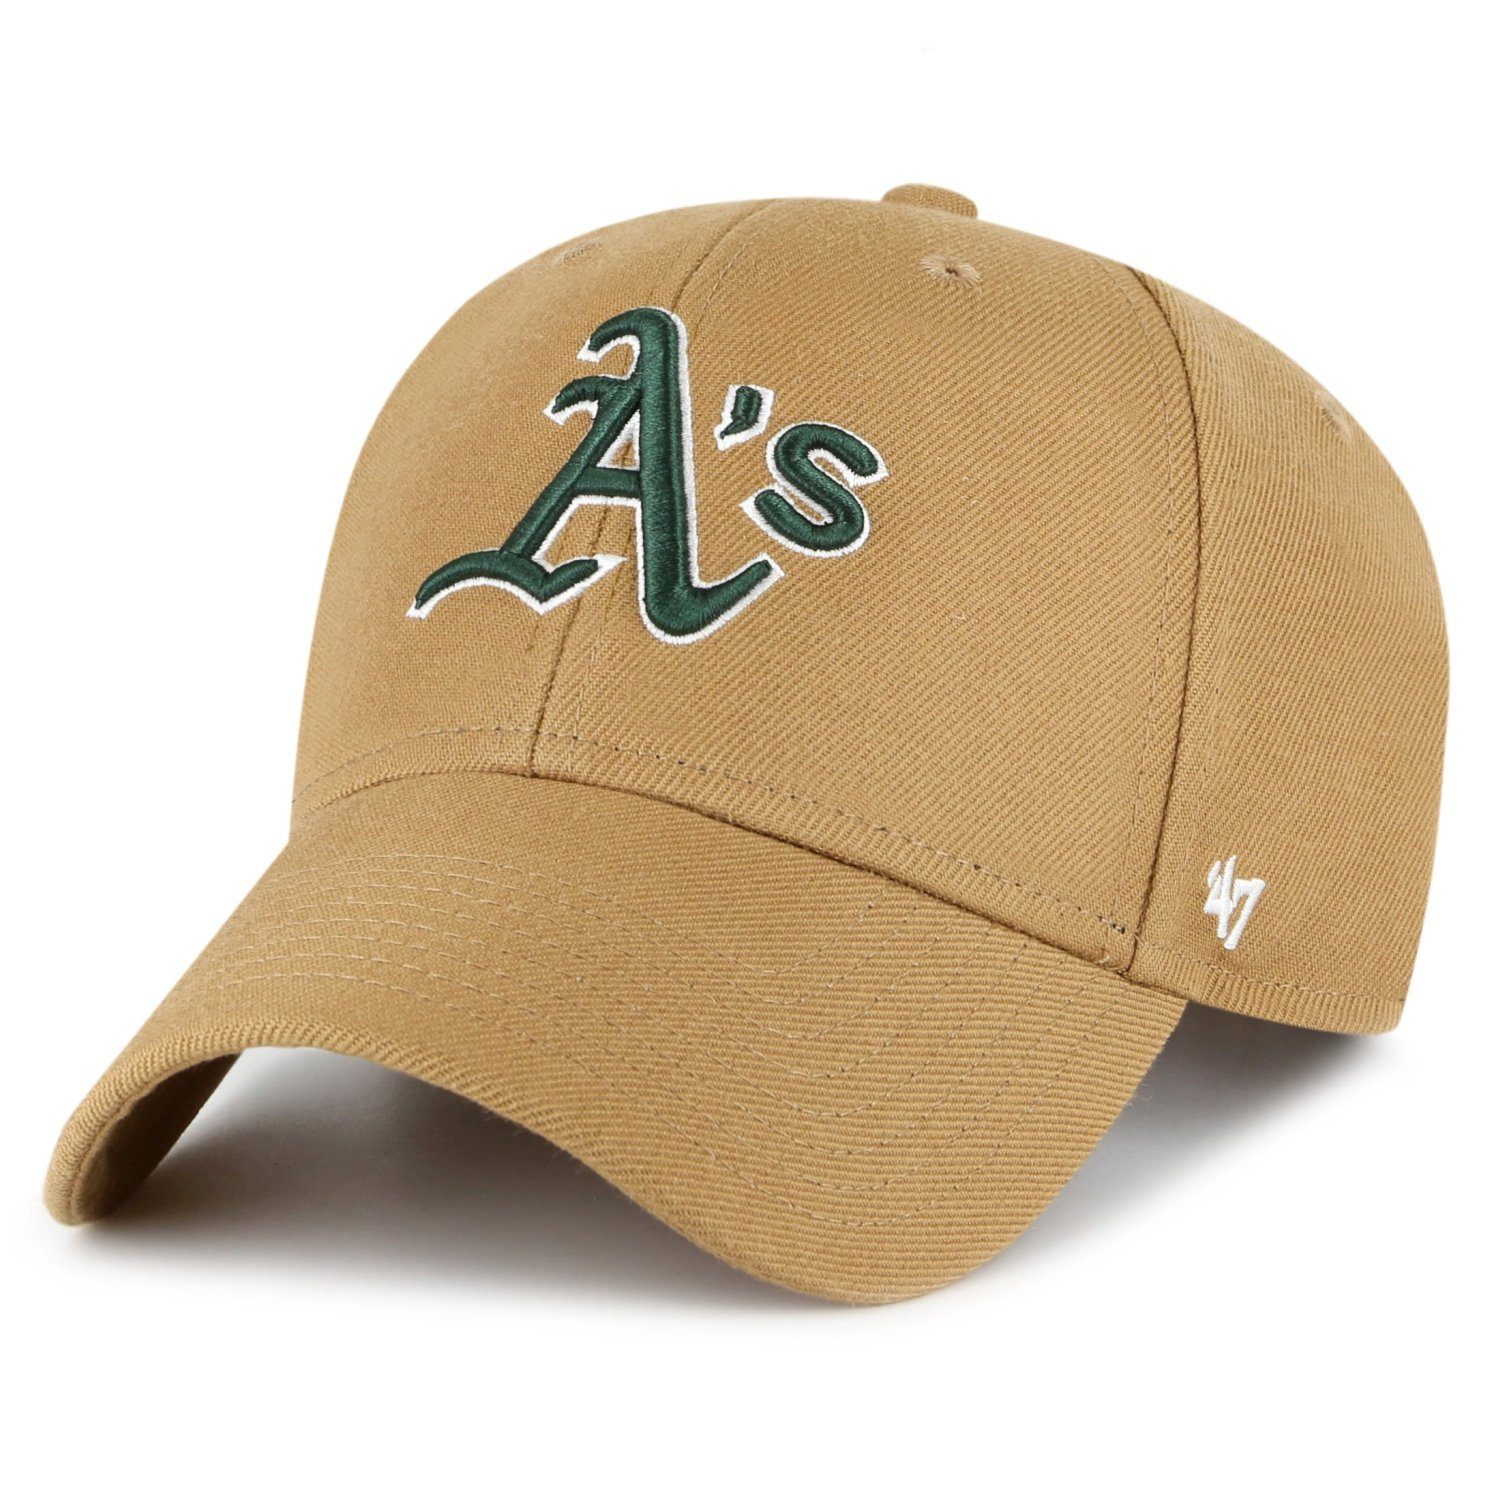 '47 Athletics MLB Cap Oakland Brand Snapback